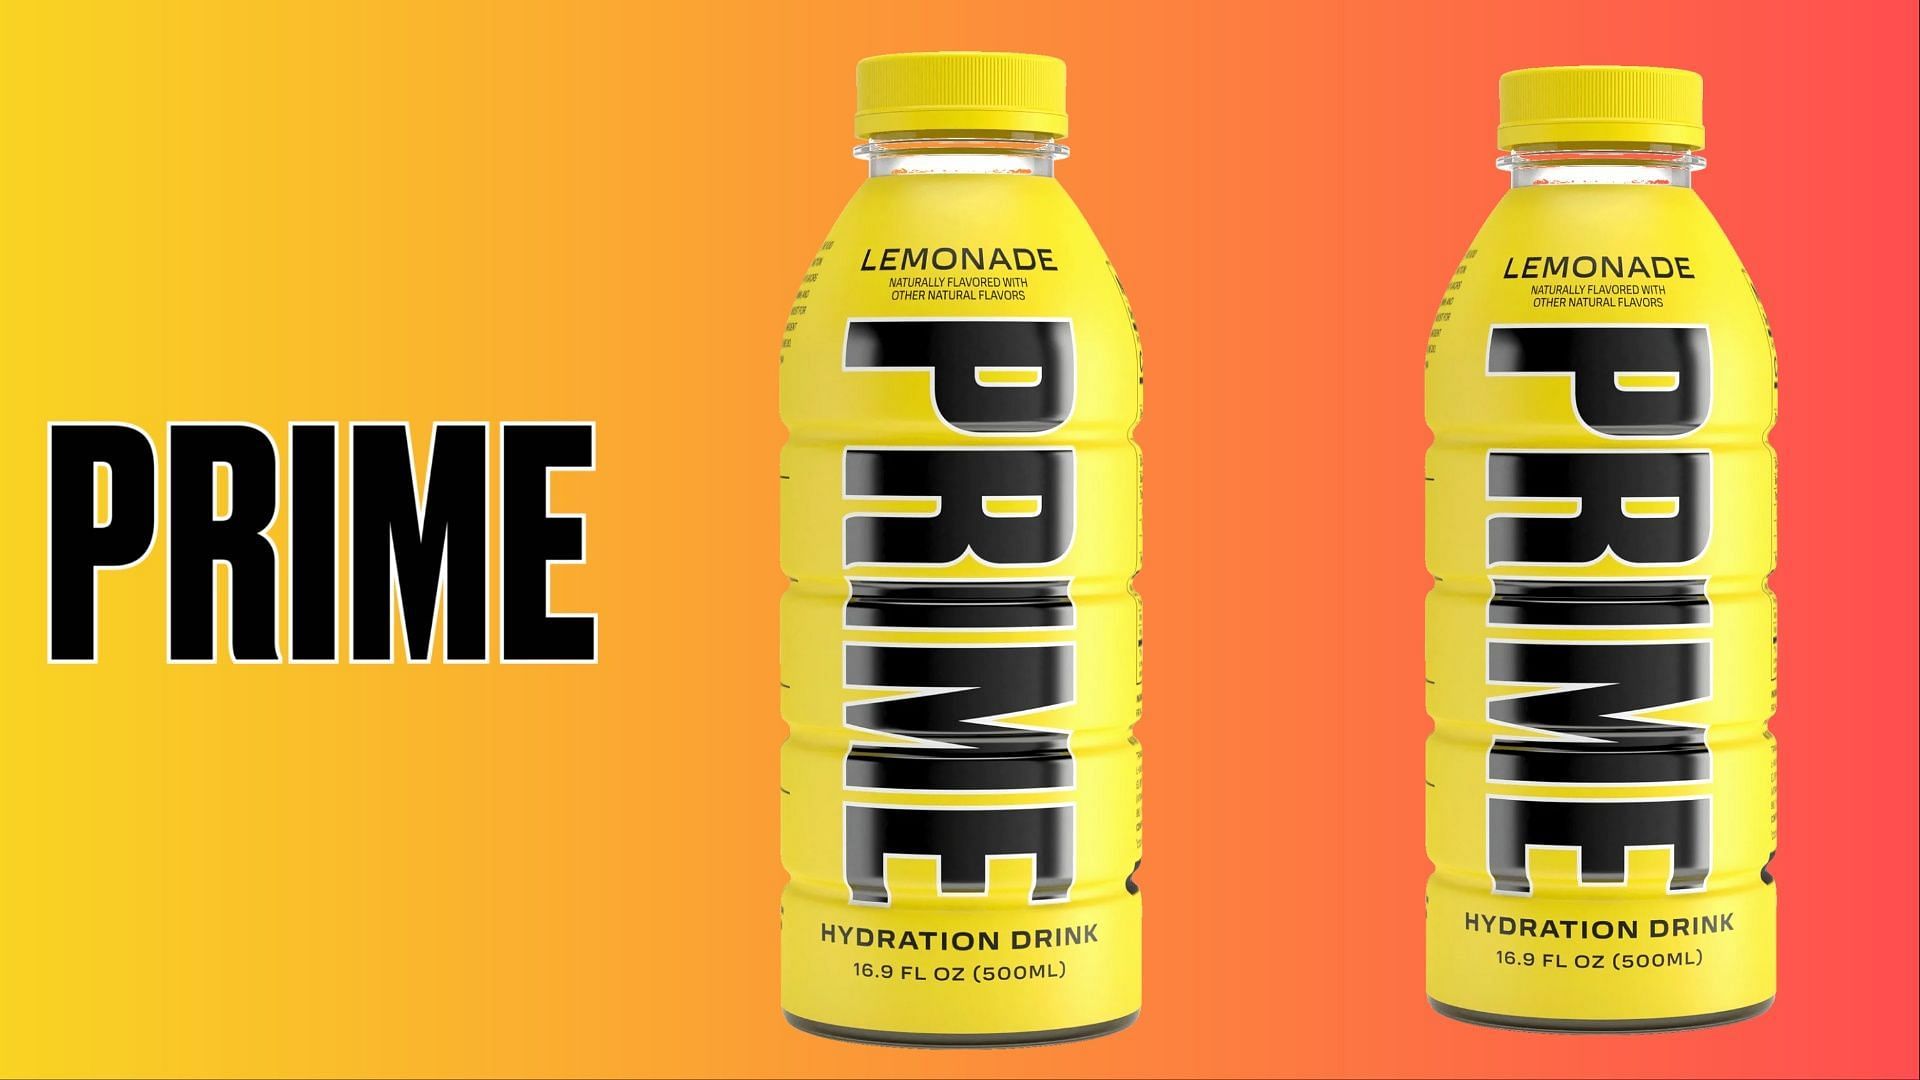 Prime unveils the new Lemonade Prime flavored drink (Image via Prime)